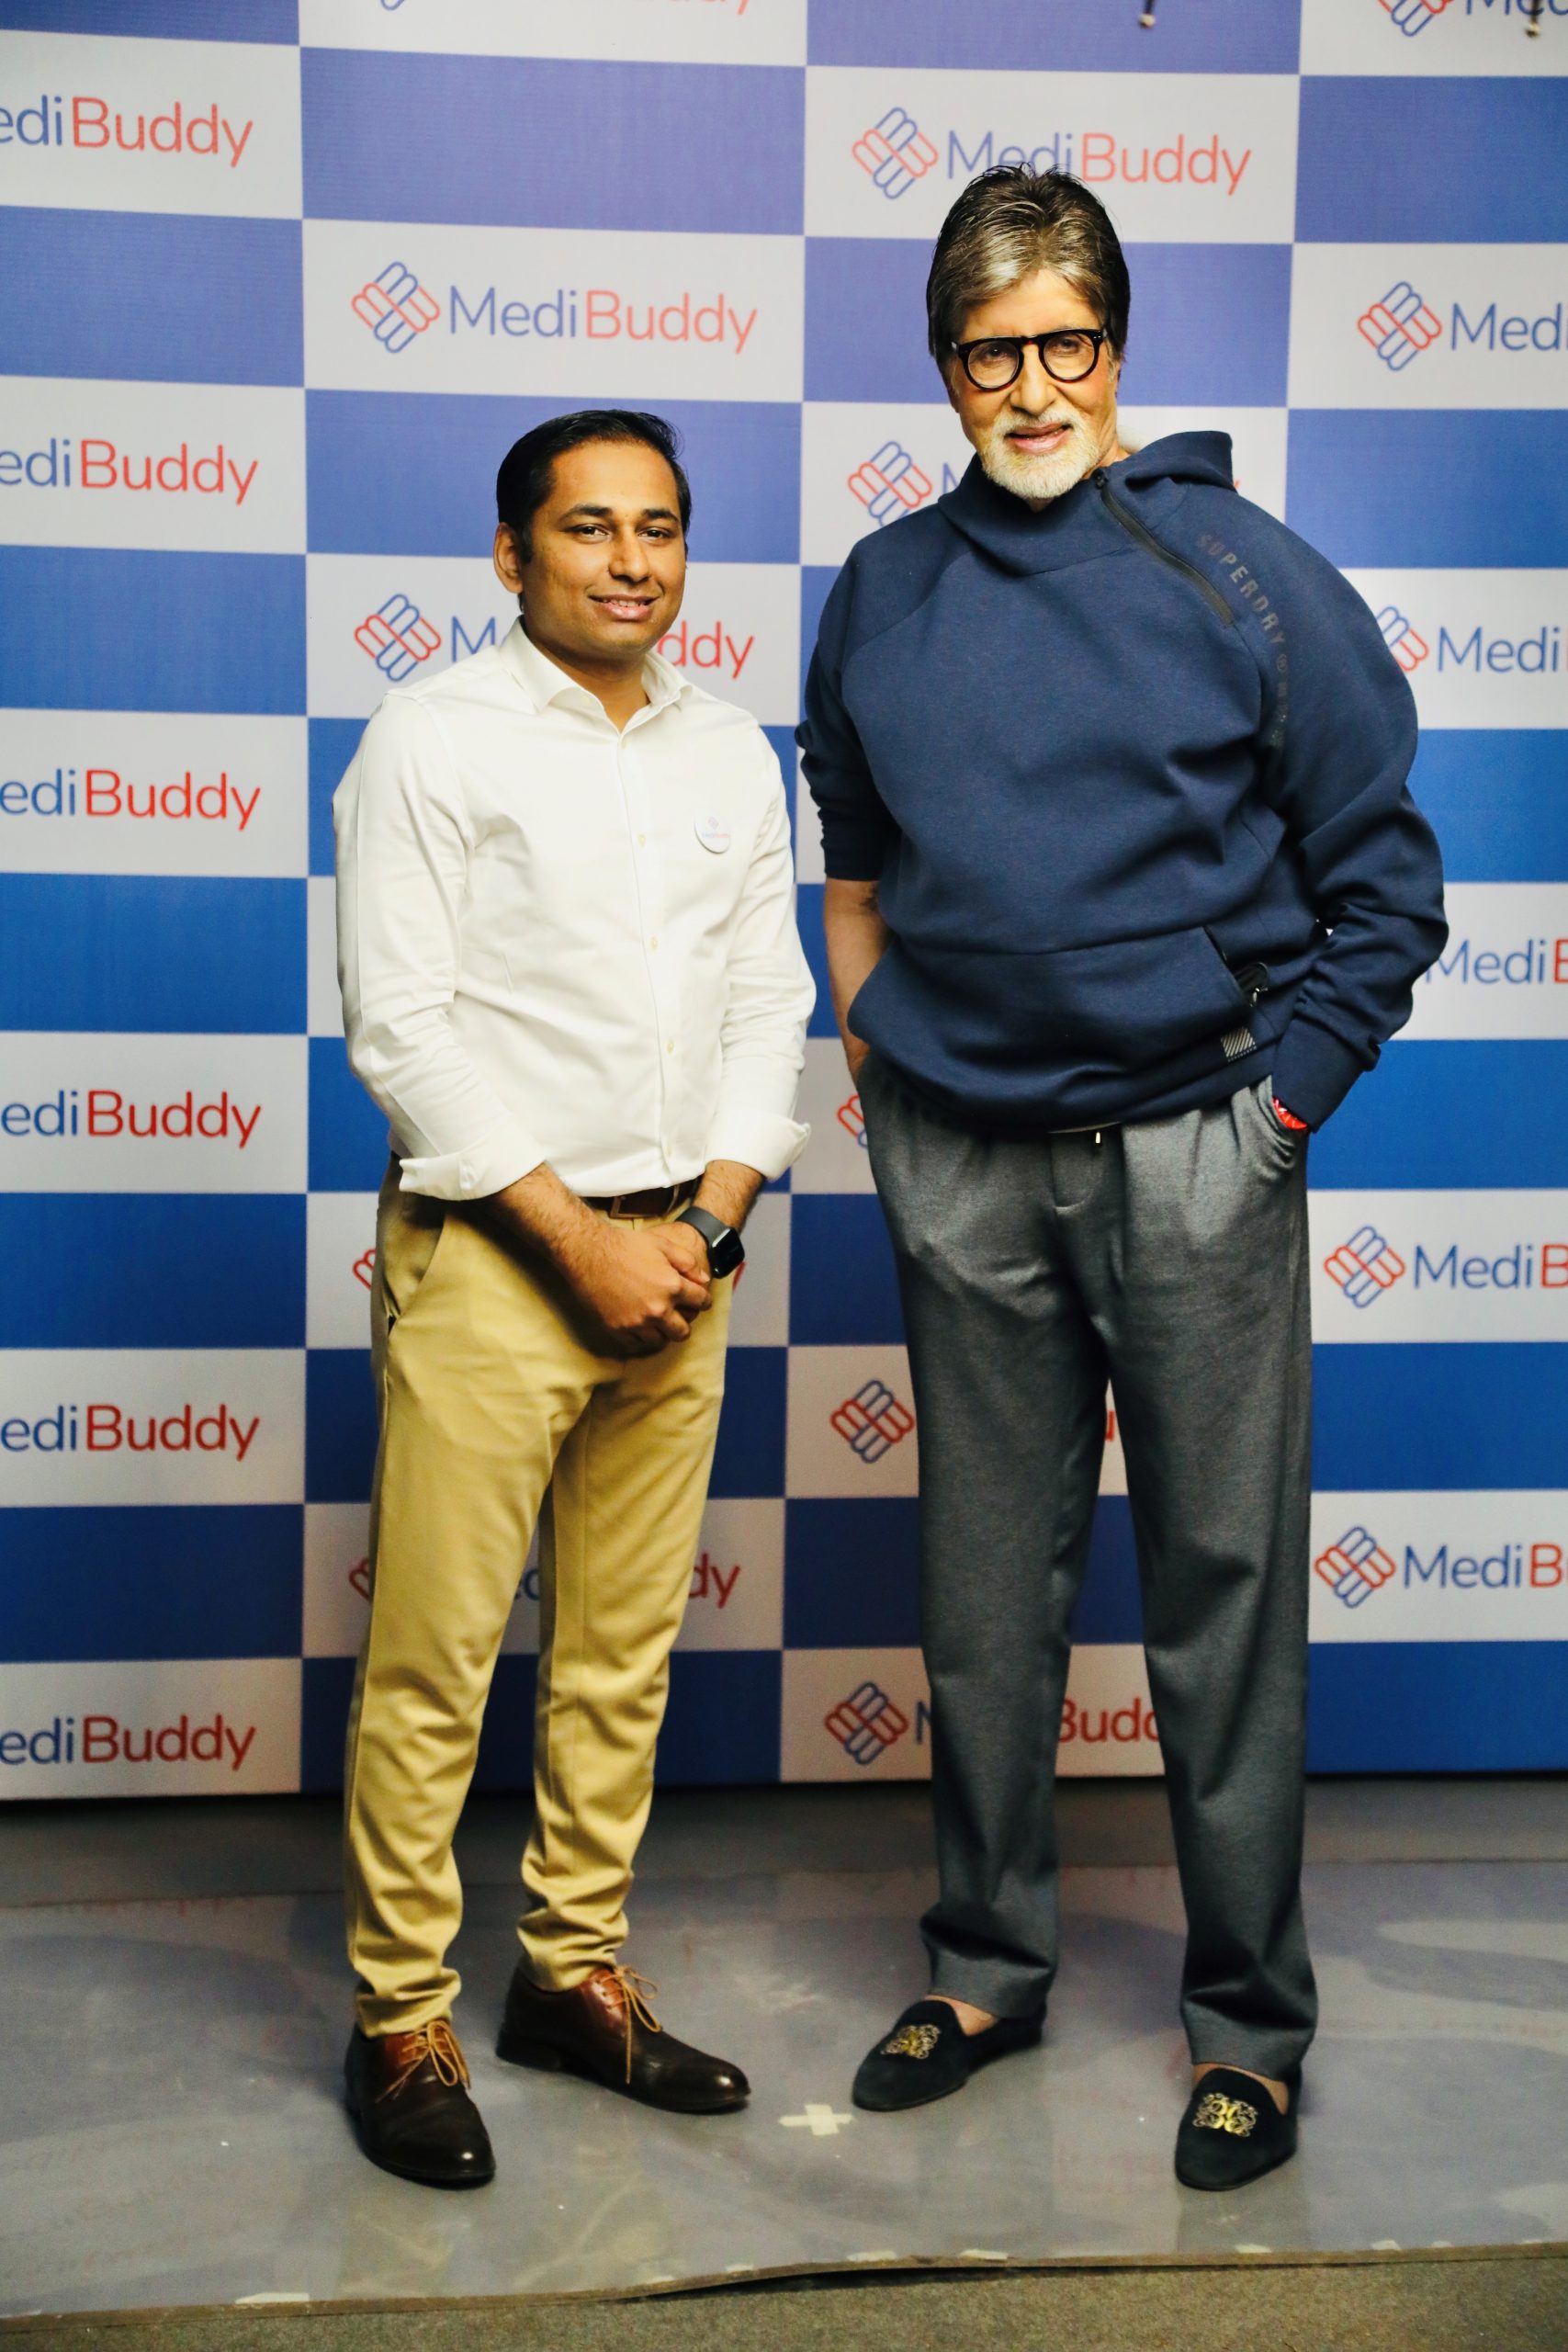 MediBuddy ropes in Bollywood Megastar Amitabh Bachchan as official brand ambassador...